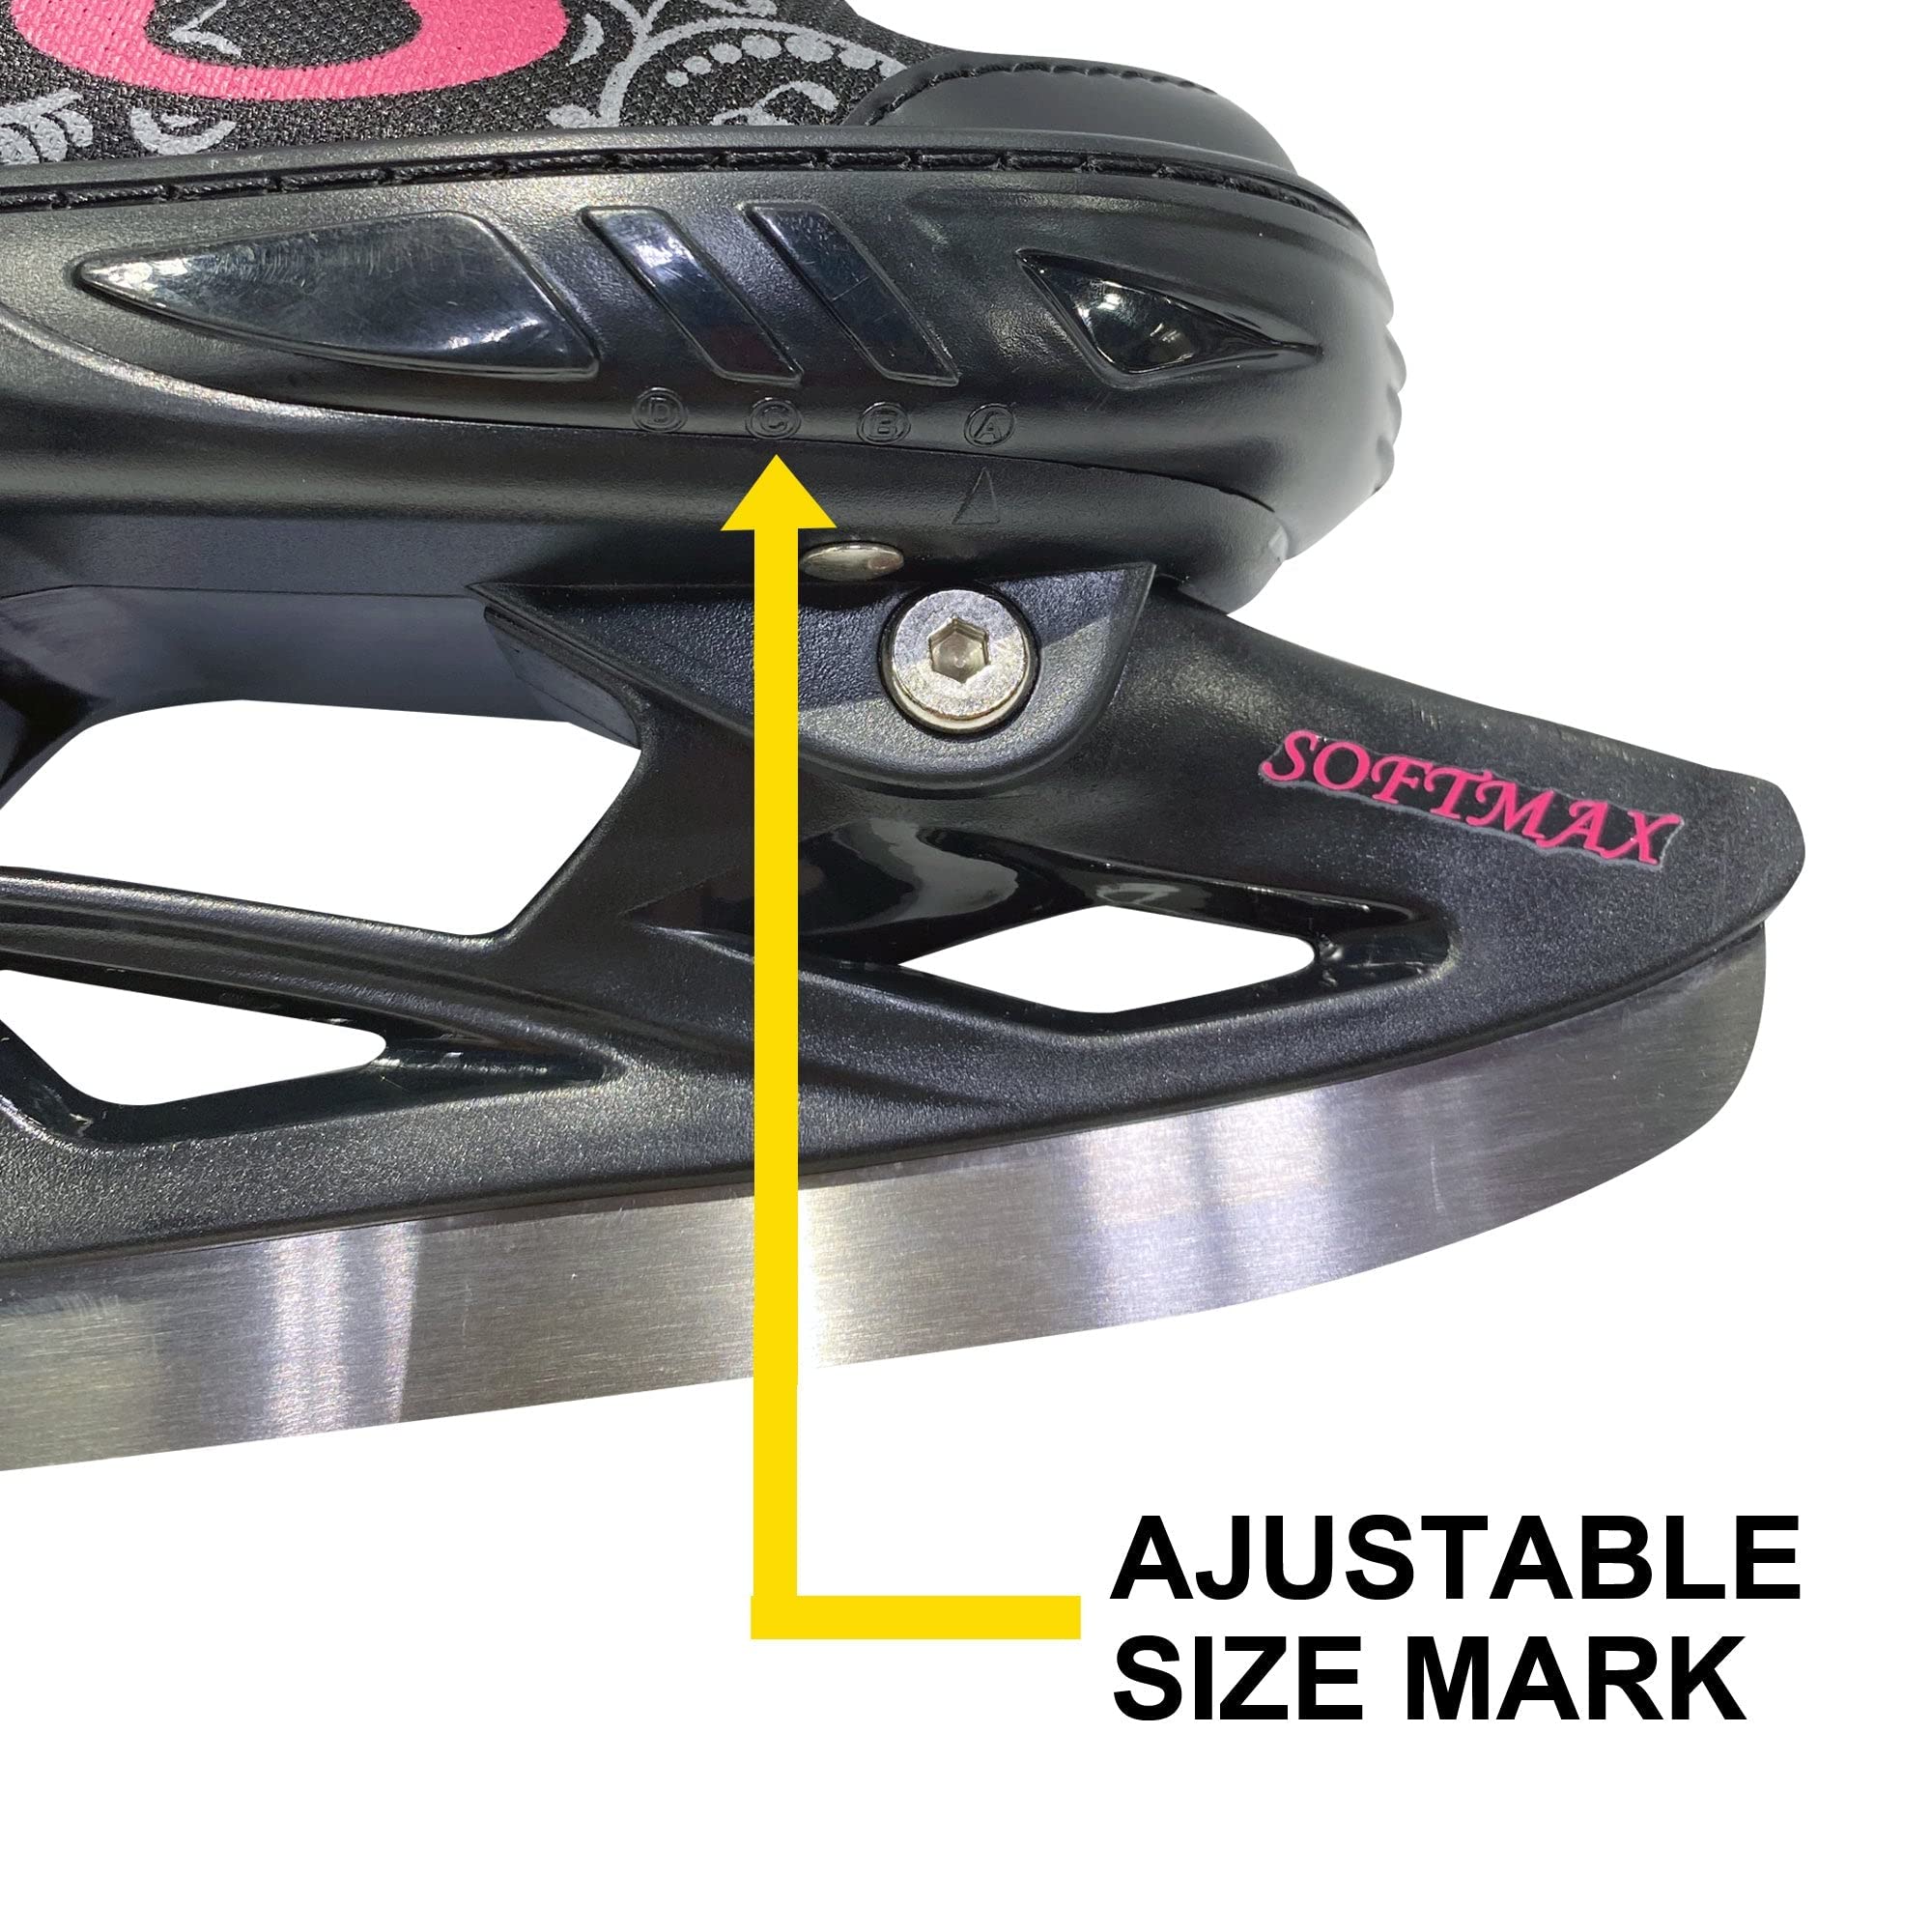 Softmax - Adjustable Ice Skates - Hockey Skates for Boys and Girls - Insulated Kids Ice Skates with 3 Sizes Adjustments